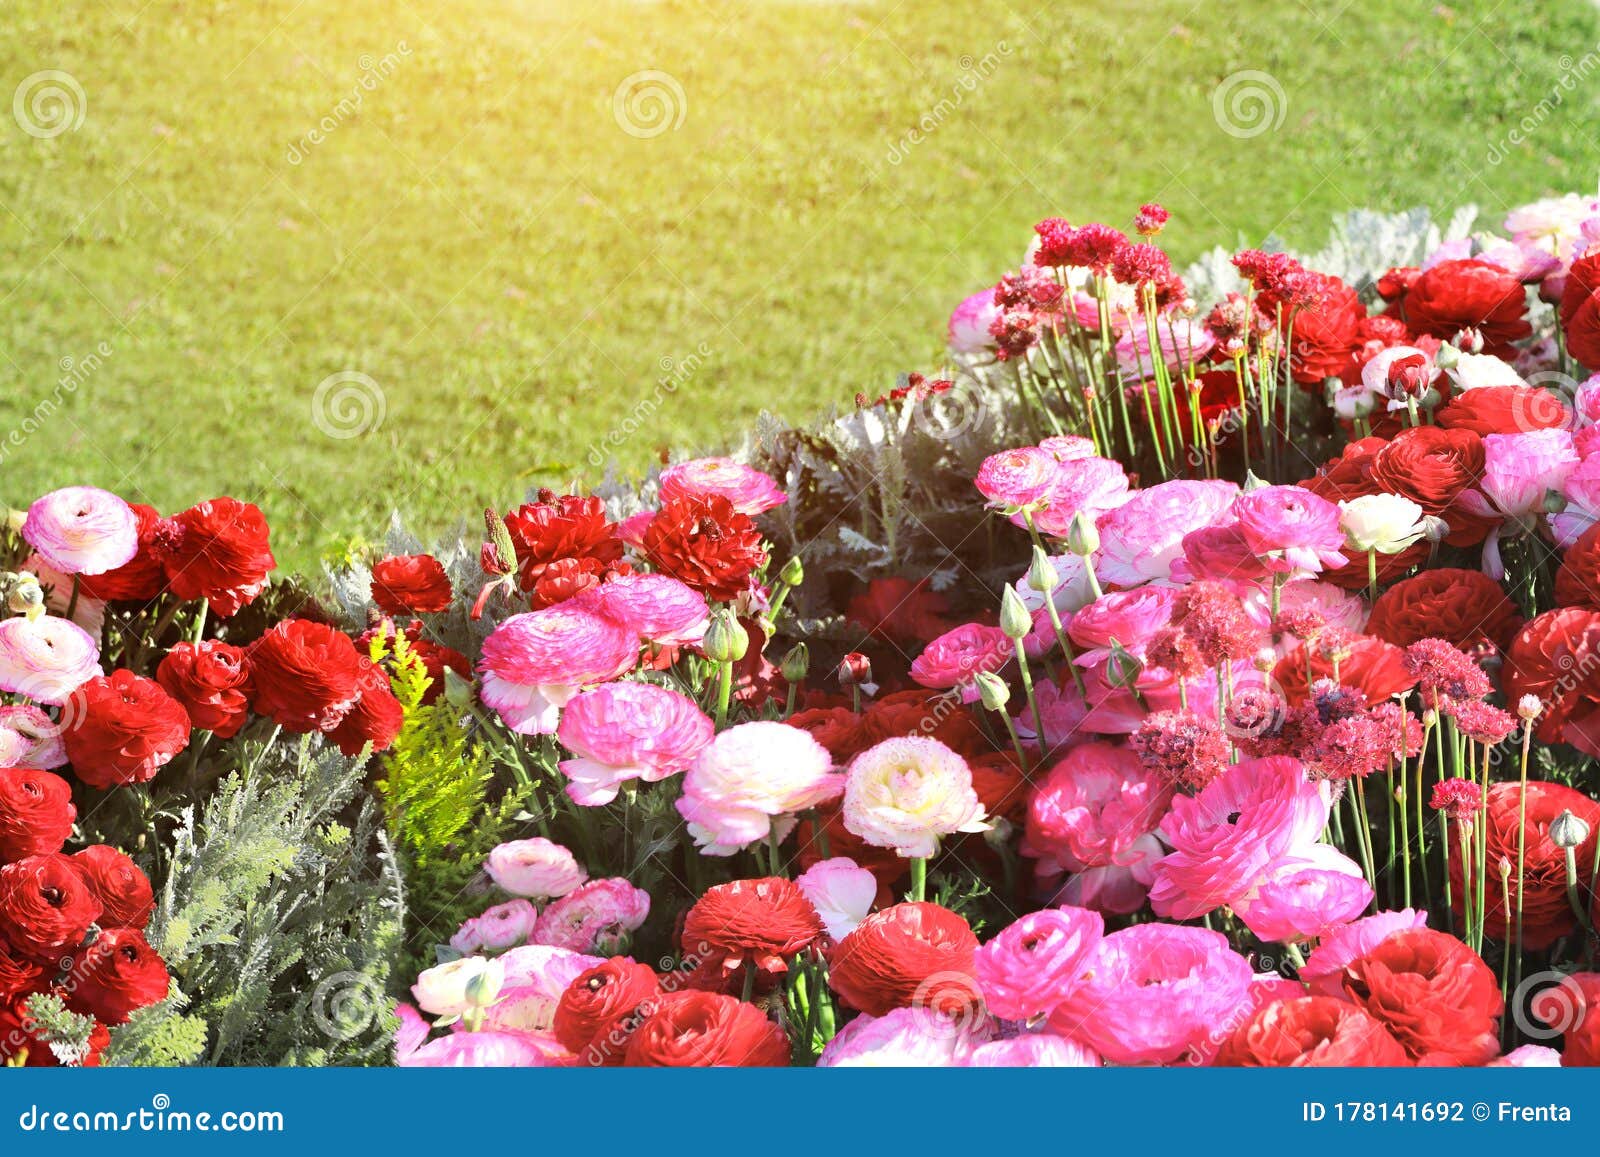 Ranunculus Flowers On Flowerbed Stock Photo Image Of Meadow Garden 178141692